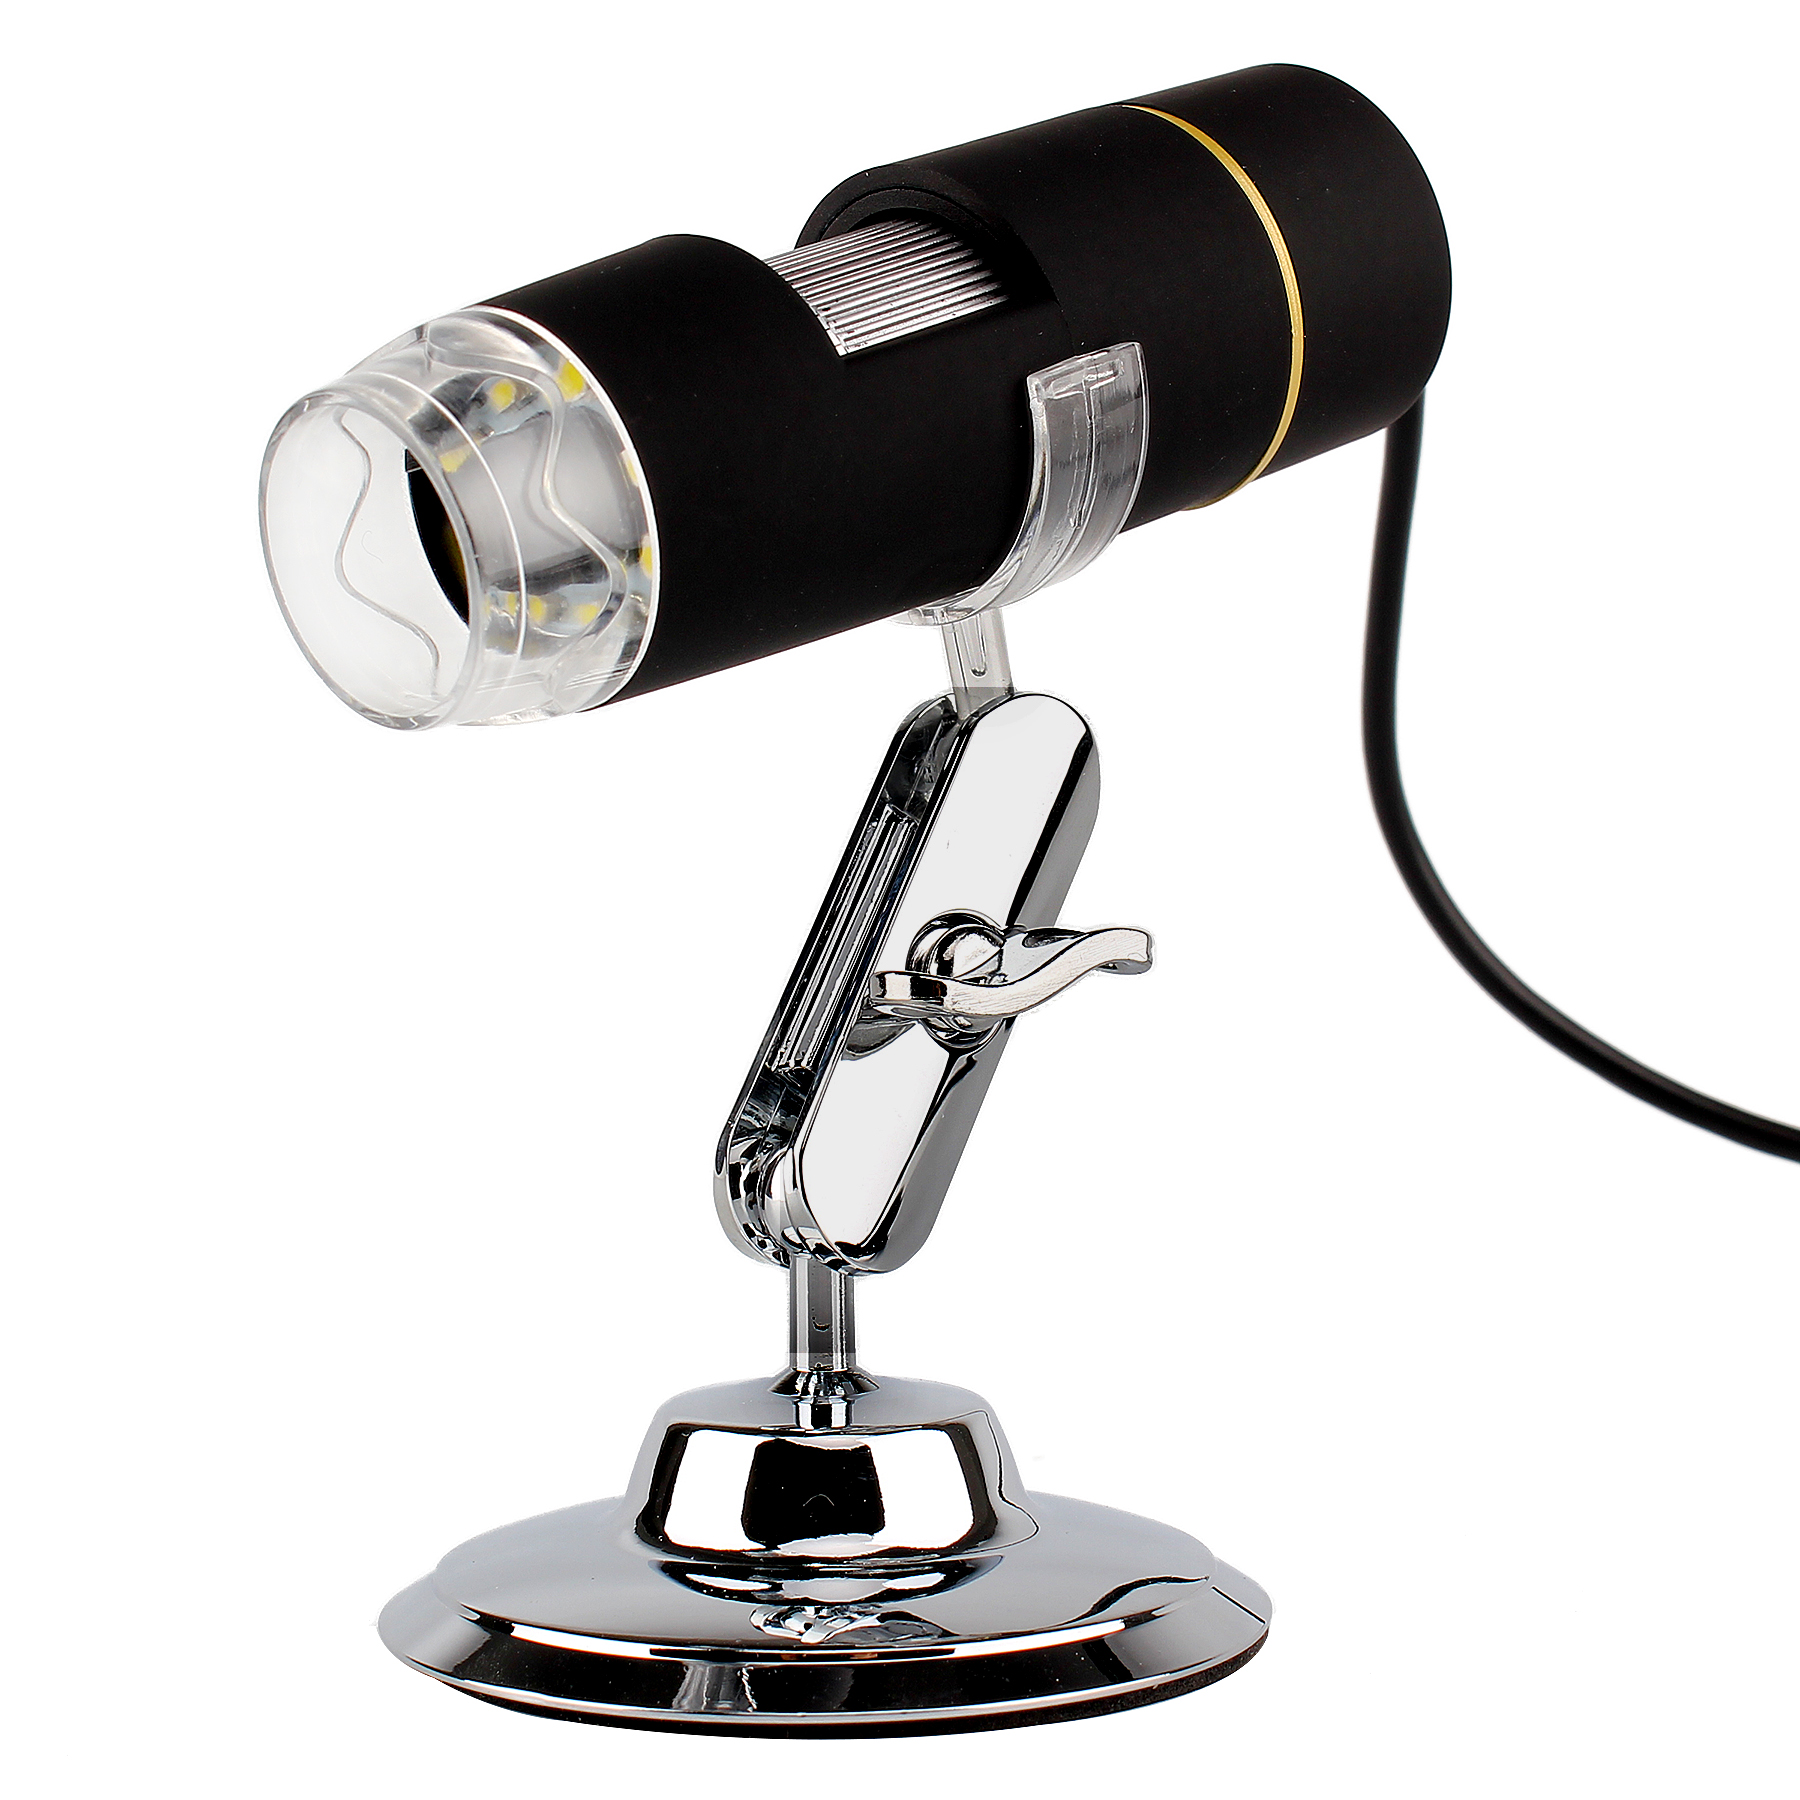 S2-USB-8-LED-1X-500X-Digital-Microscope-Endoscope-Magnifier-Video-Camera-Real-03MP13MP2MP-1043636-3